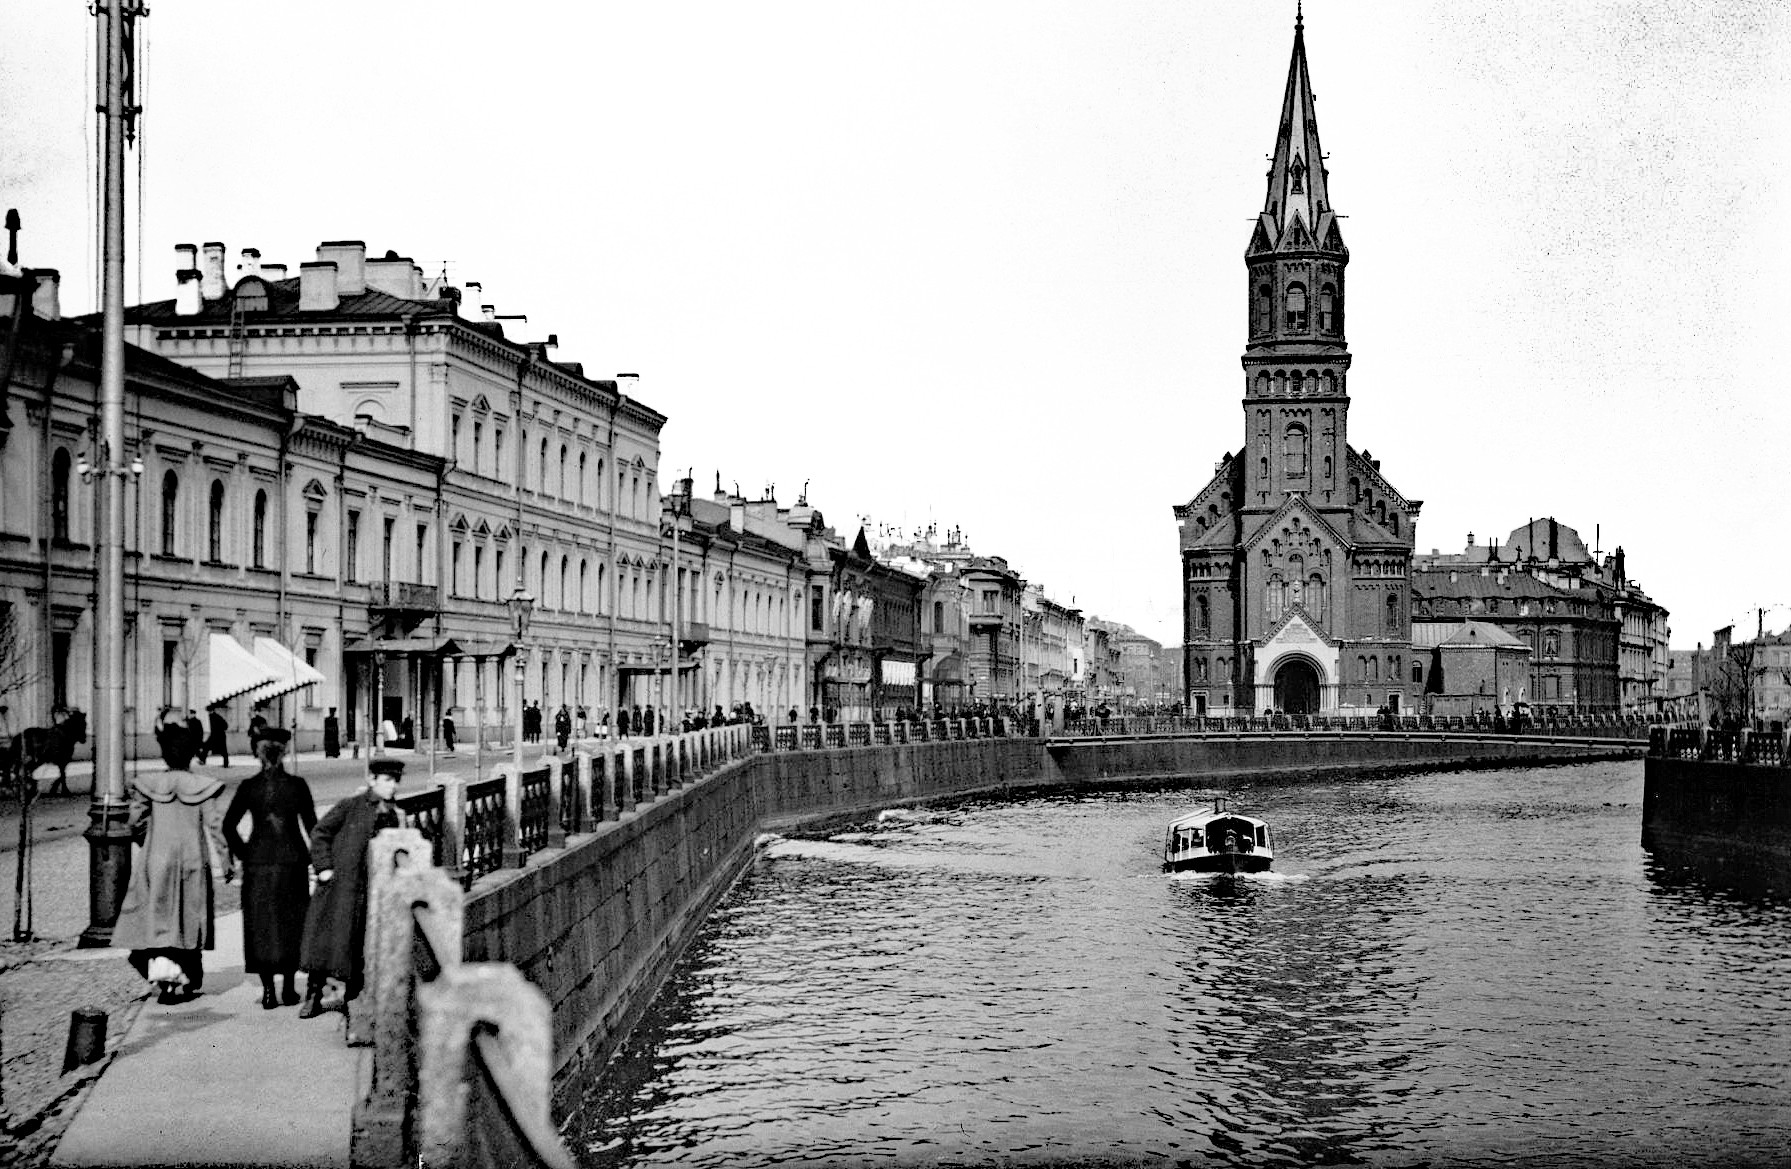 Старый петербург фото старого петербурга